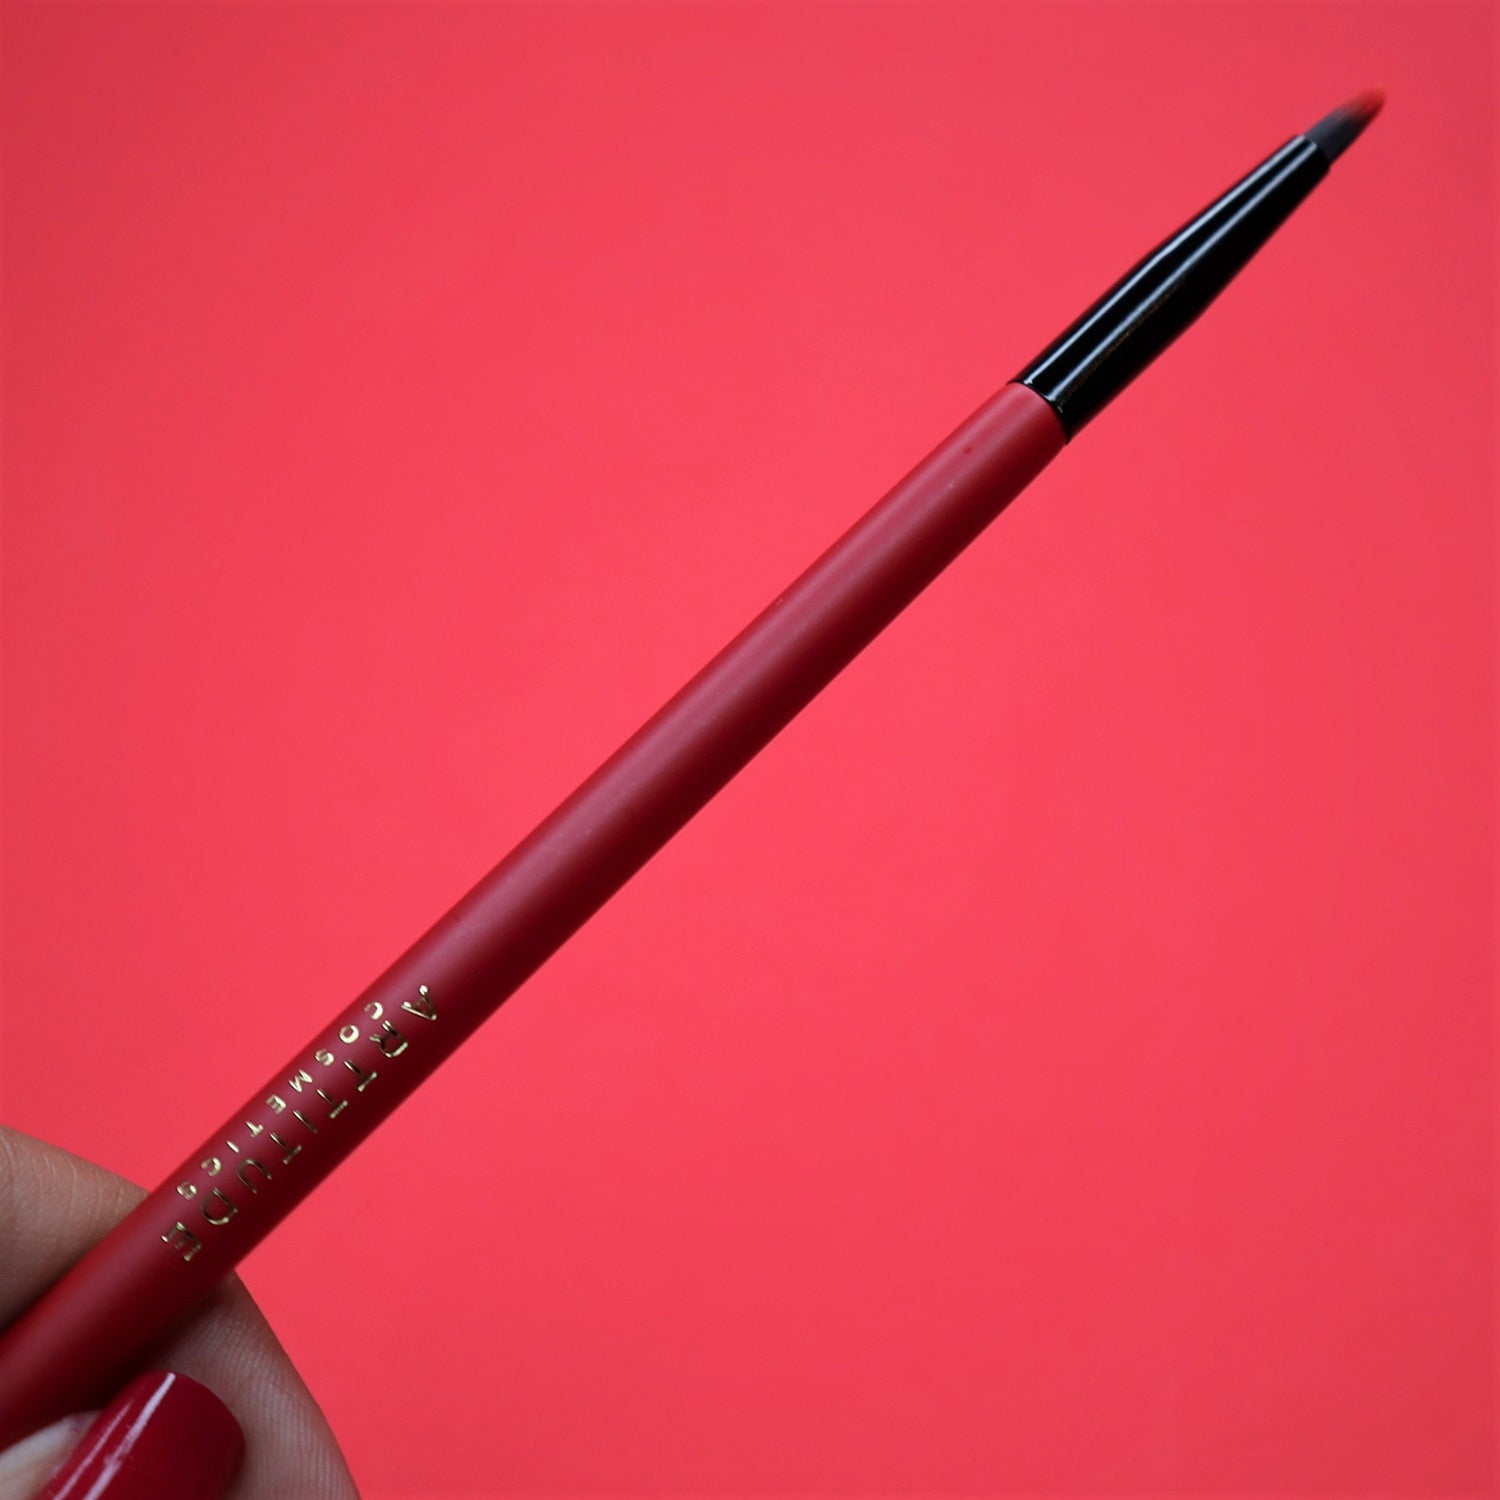 Pointed Precision Multi-Tasking Make-Up Brush